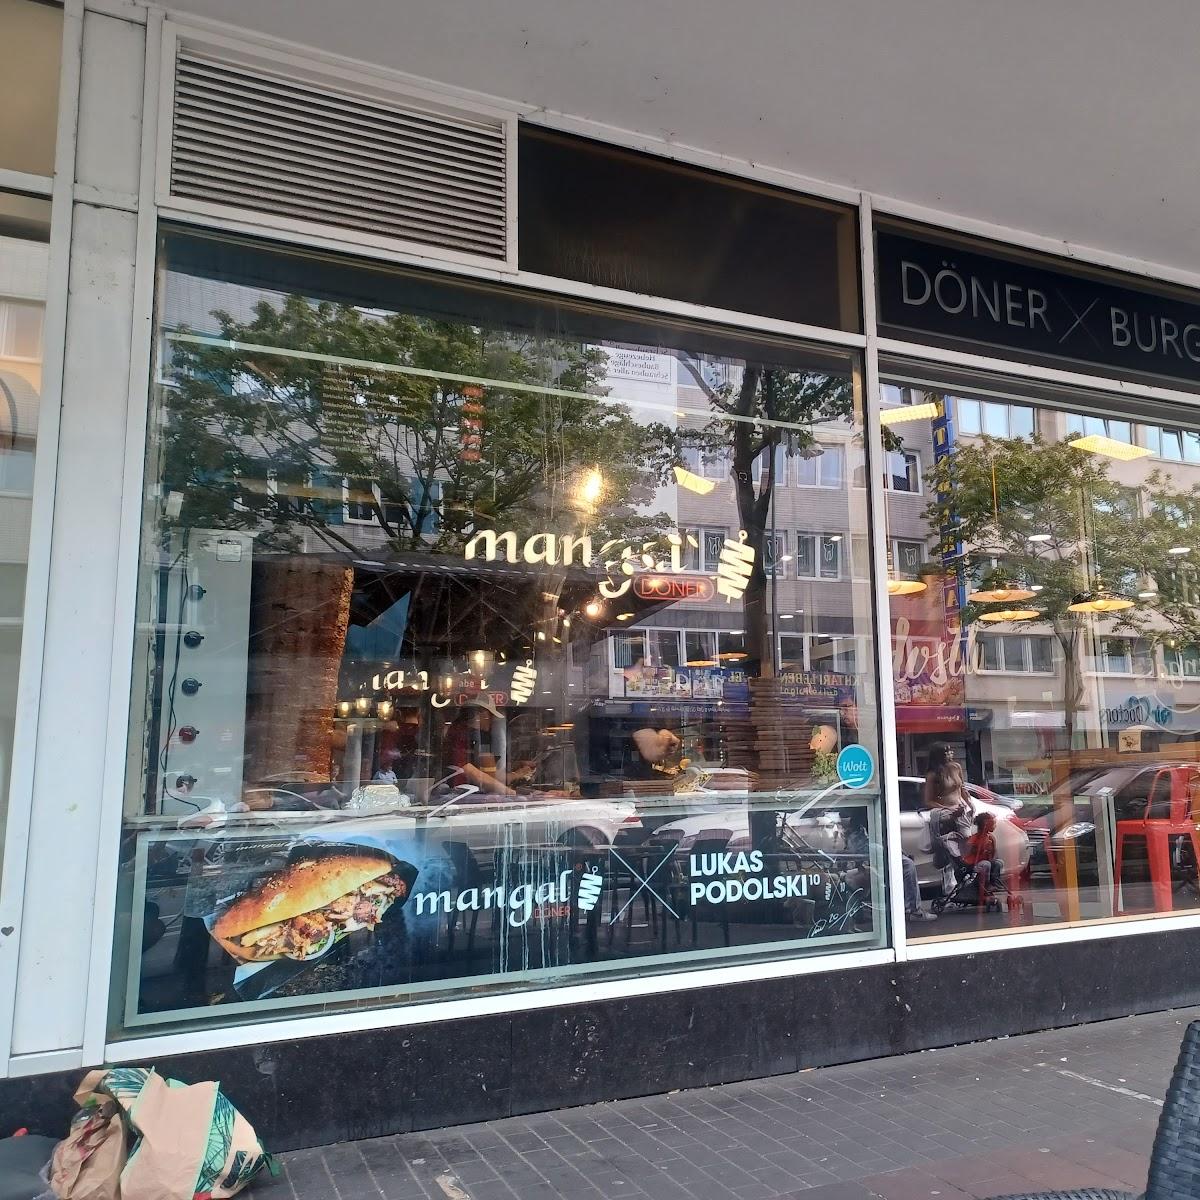 Restaurant "Mangal Döner Kalk" in Köln